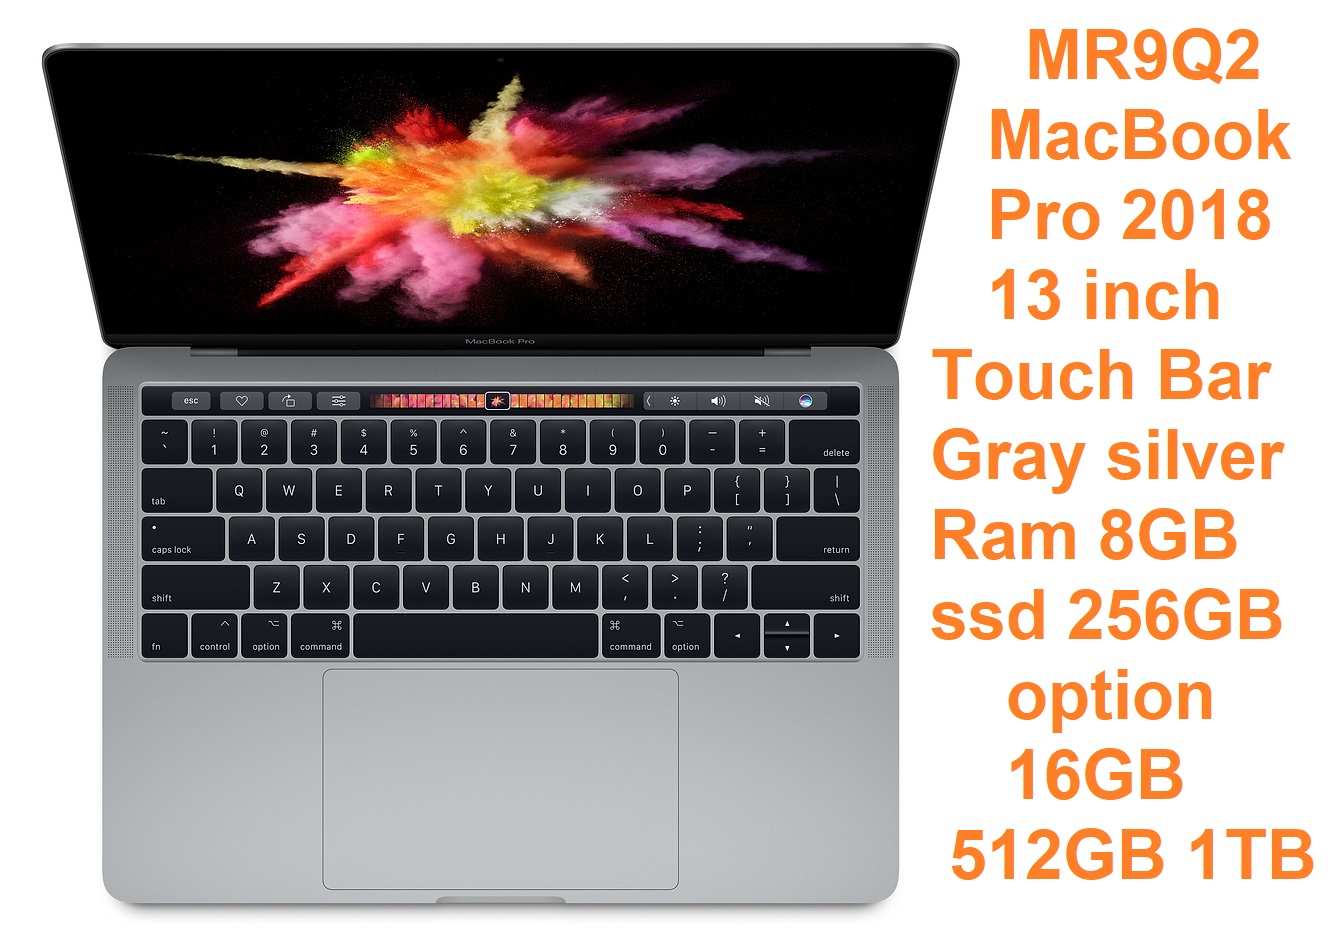 MR9Q2 MacBook Pro 2018 13 inch Touch Bar Gray silver Ram 8GB ssd 256GB option 16GB 512GB 1TB